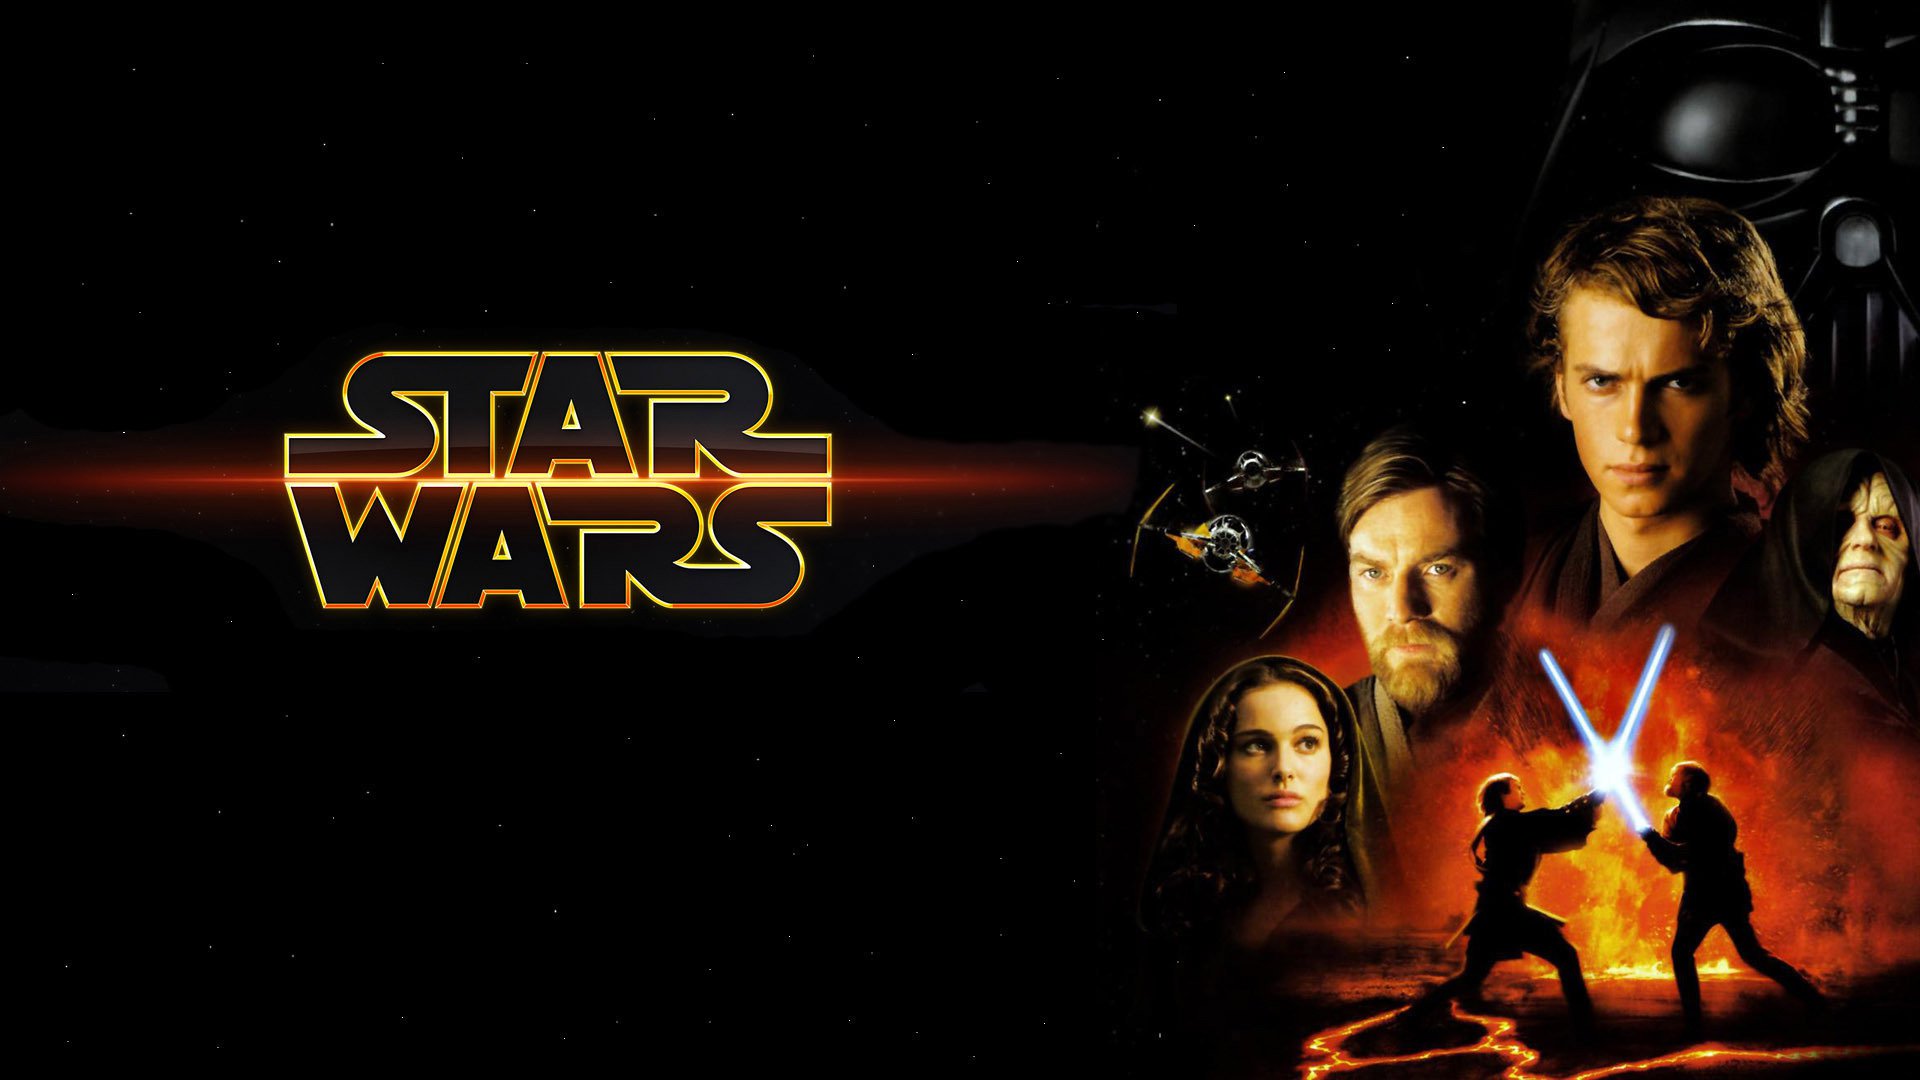 movie, star wars episode iii: revenge of the sith, anakin skywalker, darth vader, obi wan kenobi, padmé amidala, star wars